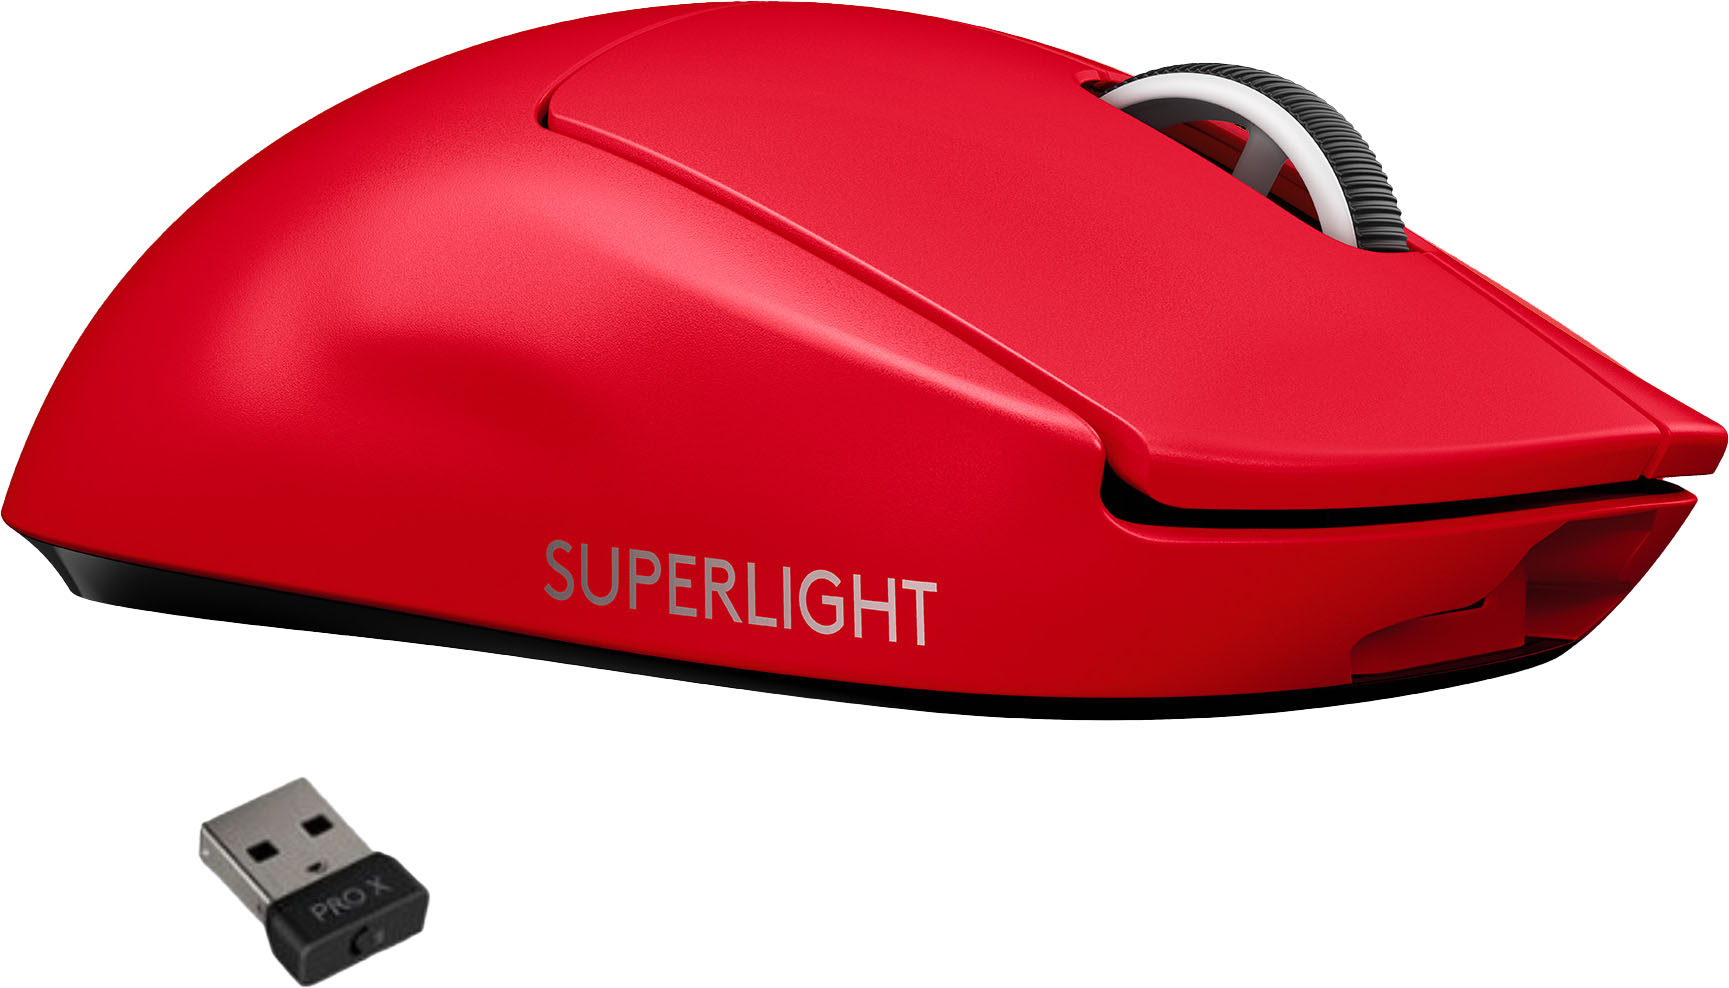 Ups hastighed skrive et brev Logitech PRO X SUPERLIGHT Lightweight Wireless Optical Gaming Mouse with  HERO 25K Sensor Red 910-006782 - Best Buy